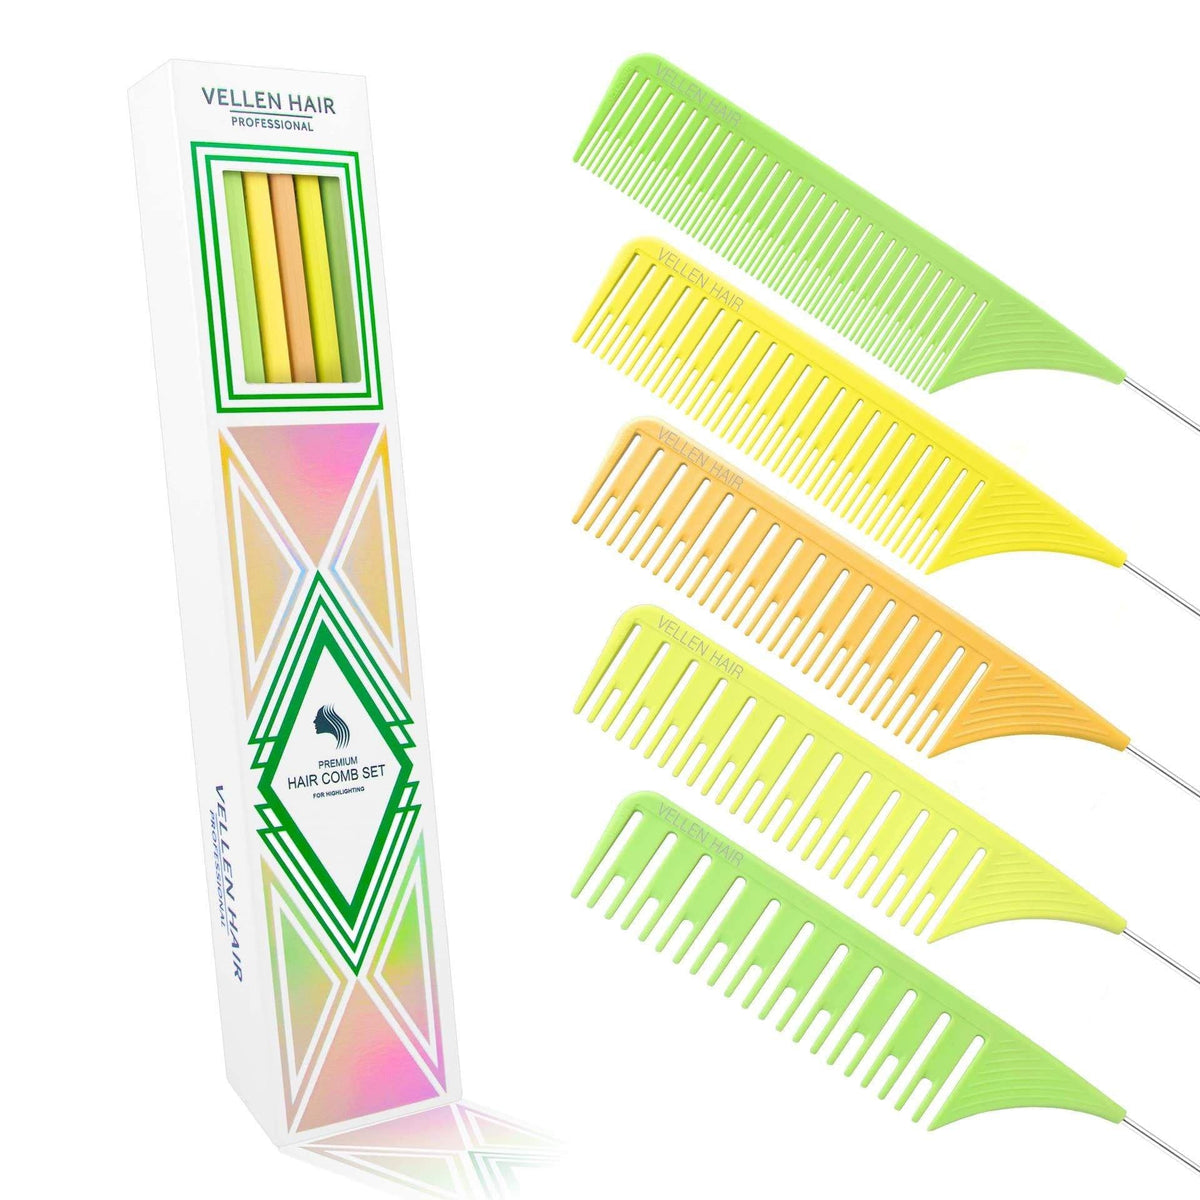 Highlighting Comb 5 Pack Green/Yellow/Orange Accessories - Vellen Hair - Luxe Pacifique